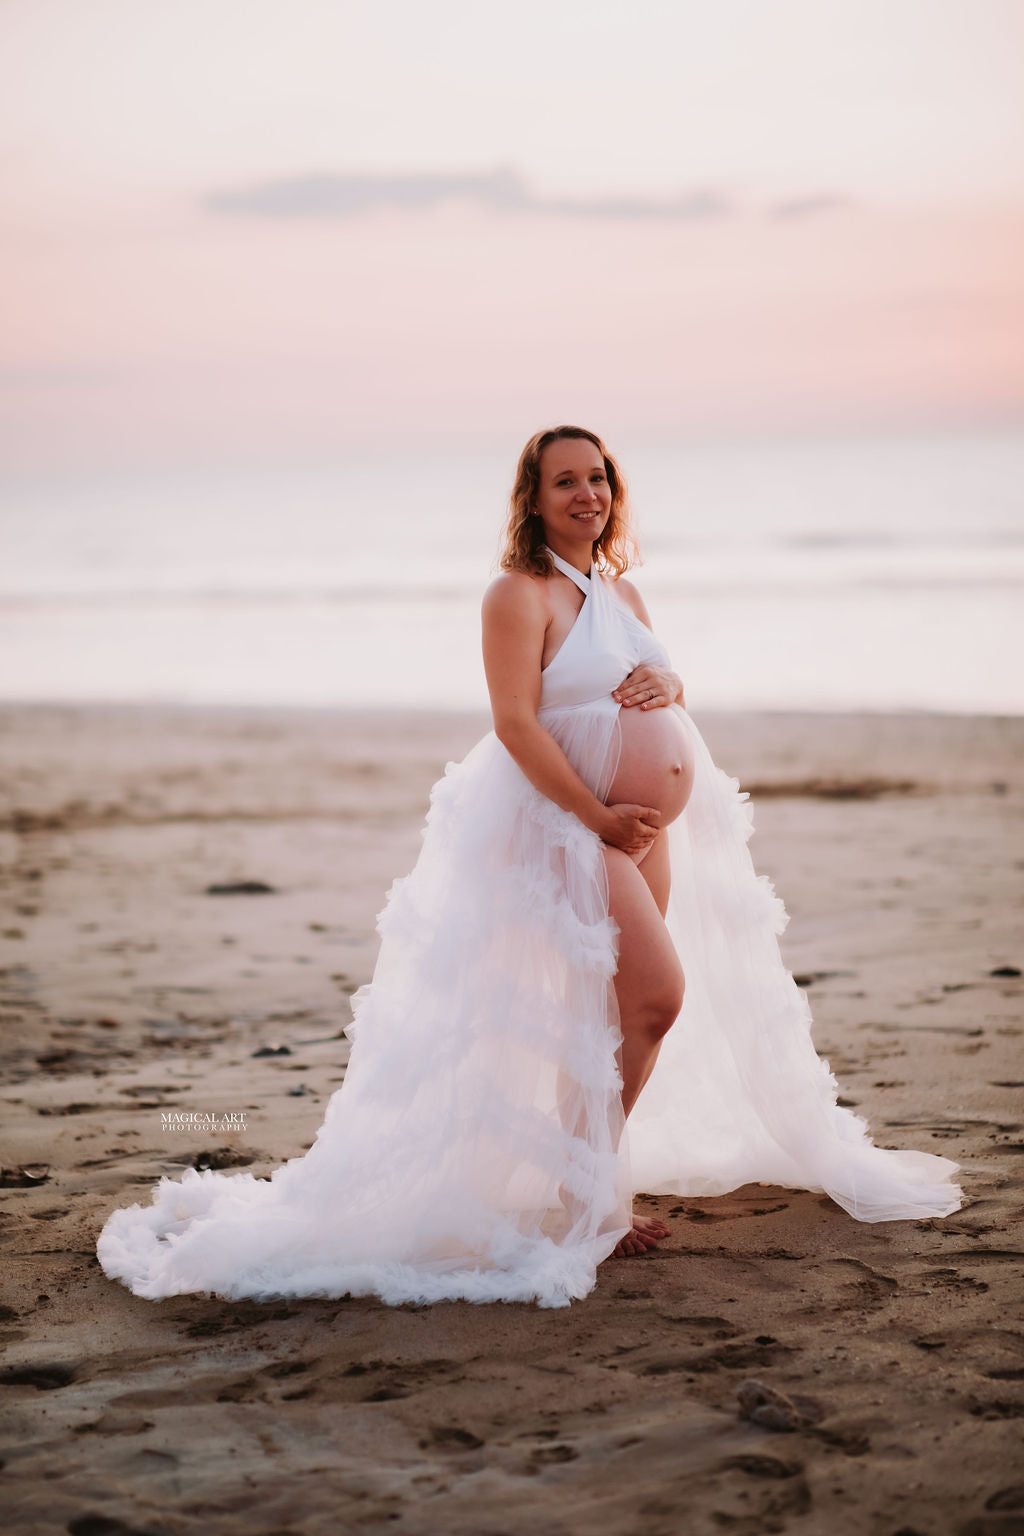 Pregnant Photoshoot Dress - White Tulle Dress